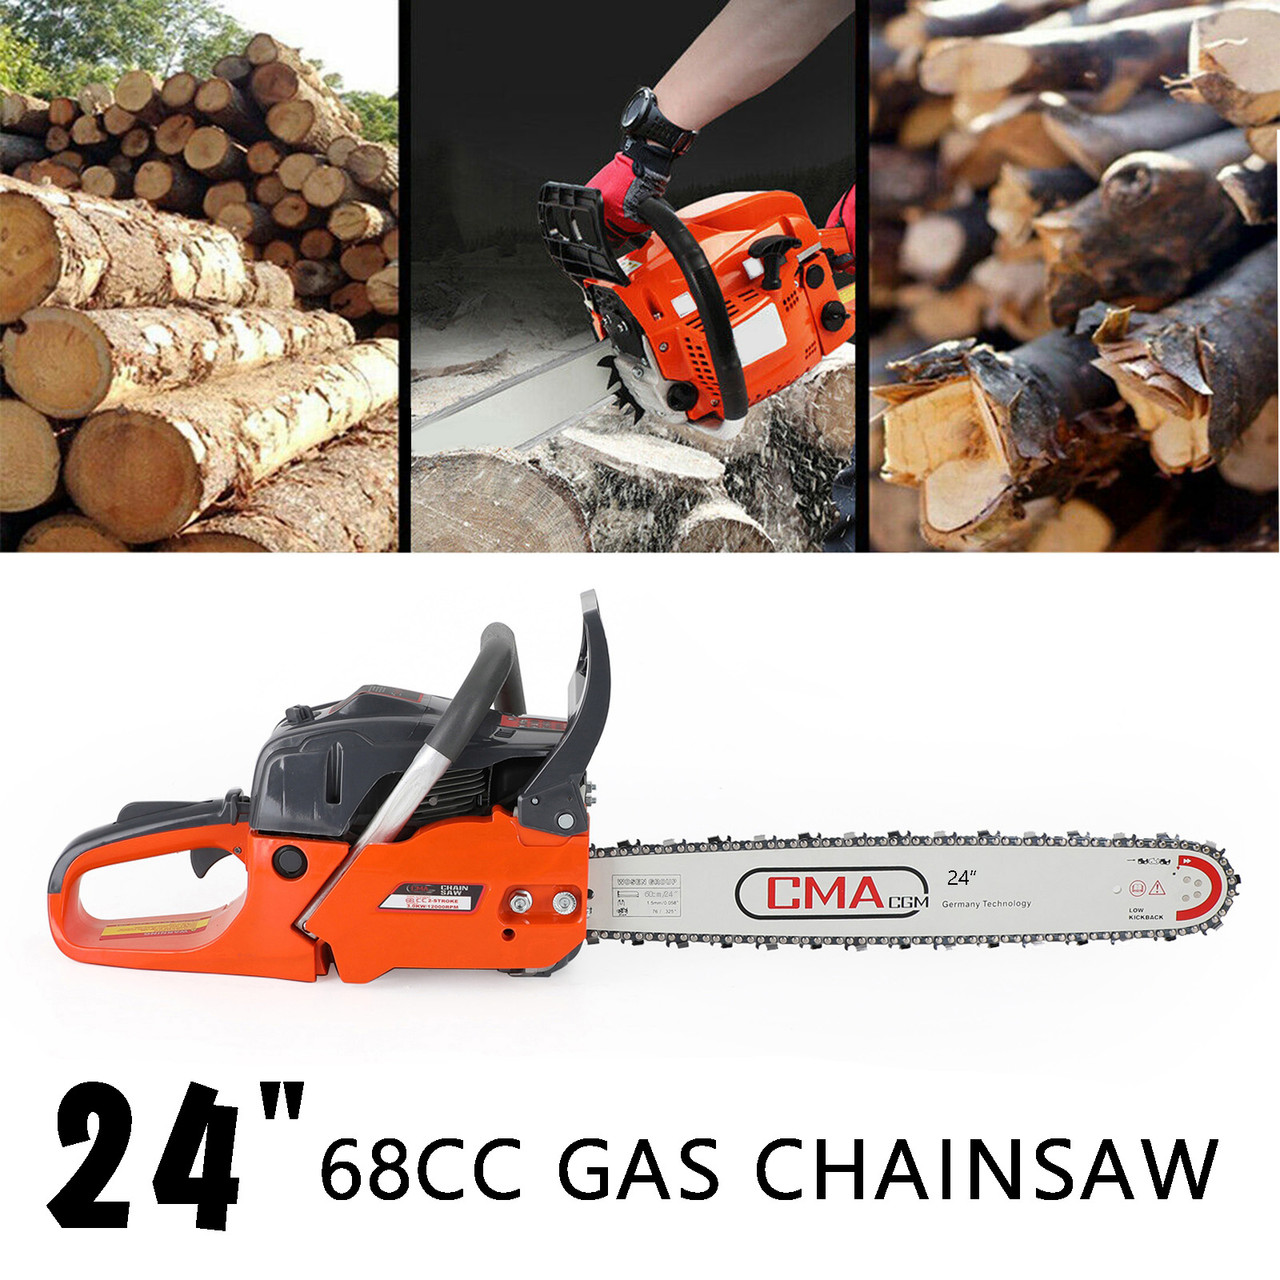 24" 68CC Gasoline Chainsaw Cutting Wood Gas Sawing Aluminum Crankcase Chain Saw